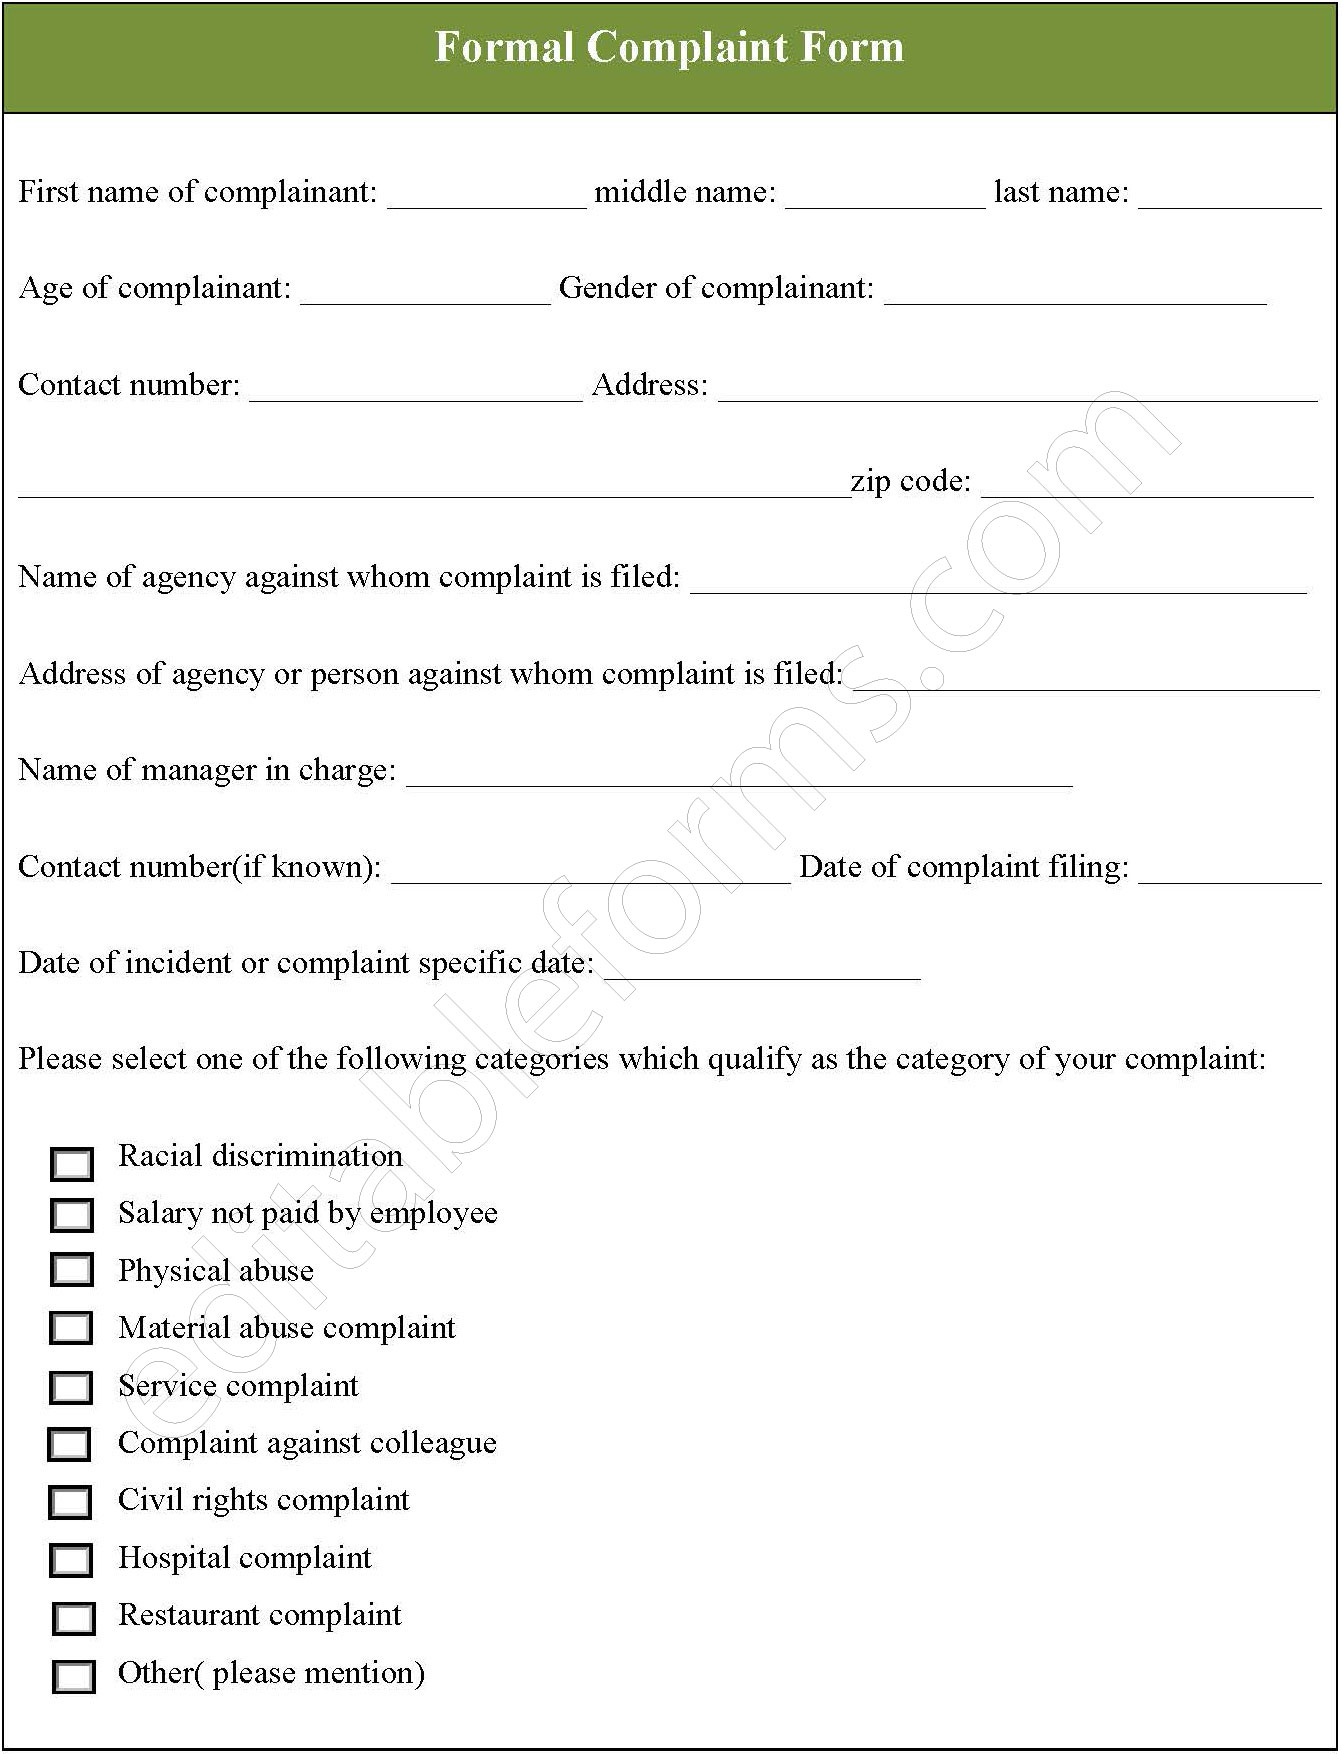 Formal Complaint Form